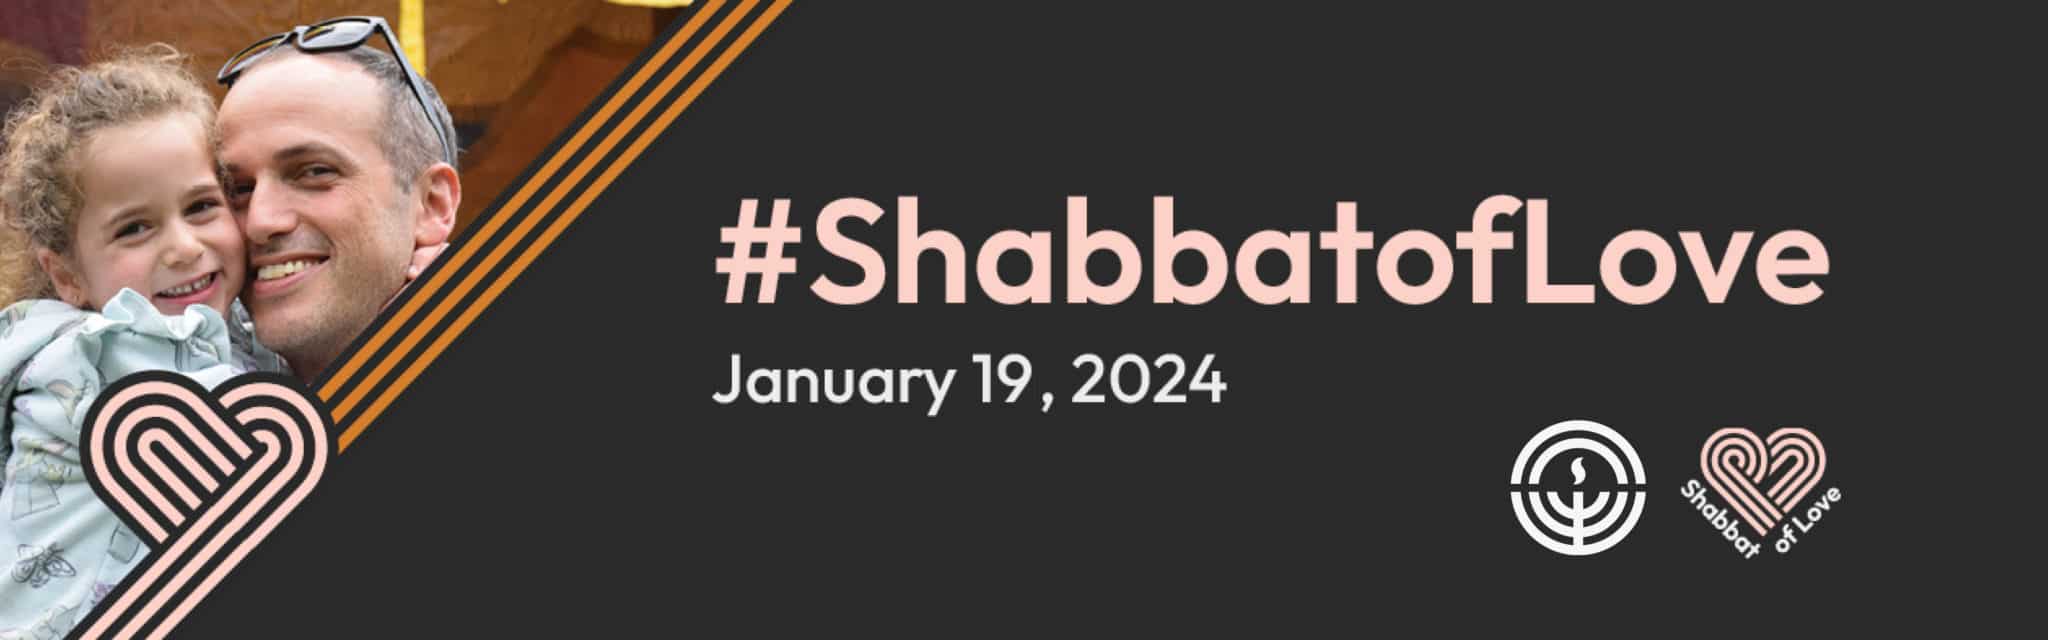 Shabbat Of Love Registration